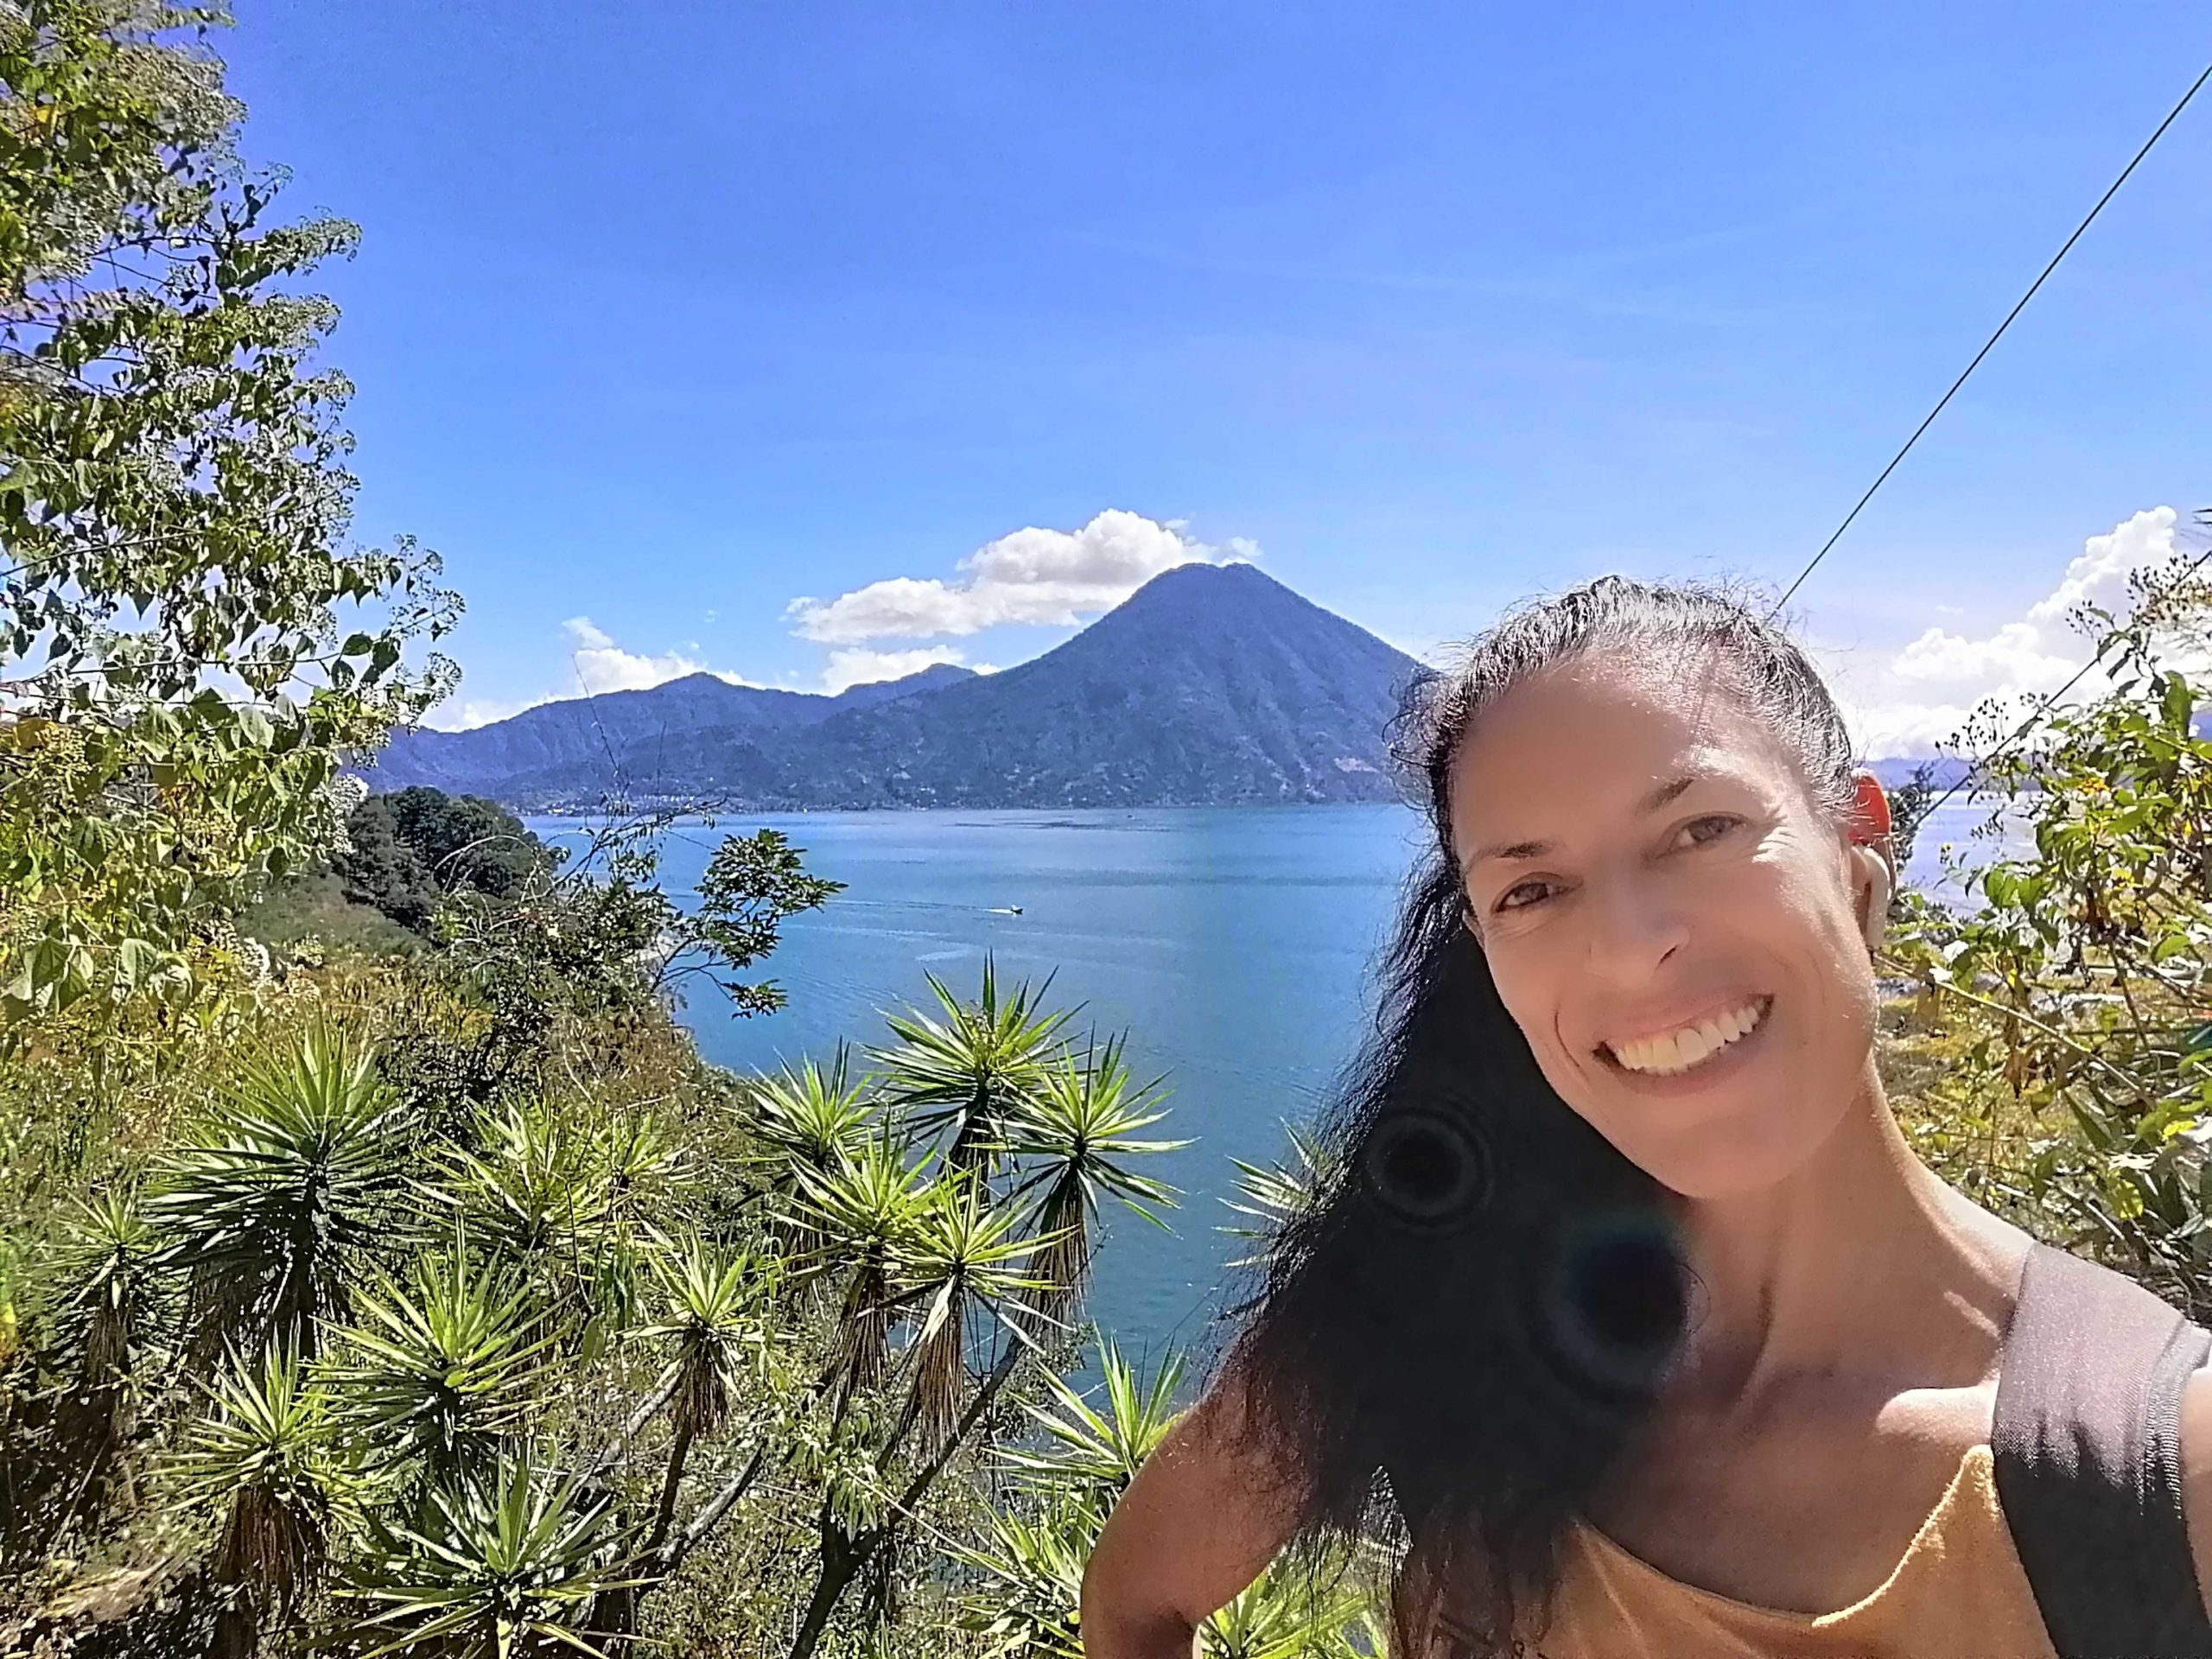 Tzununa Lac Atitlan